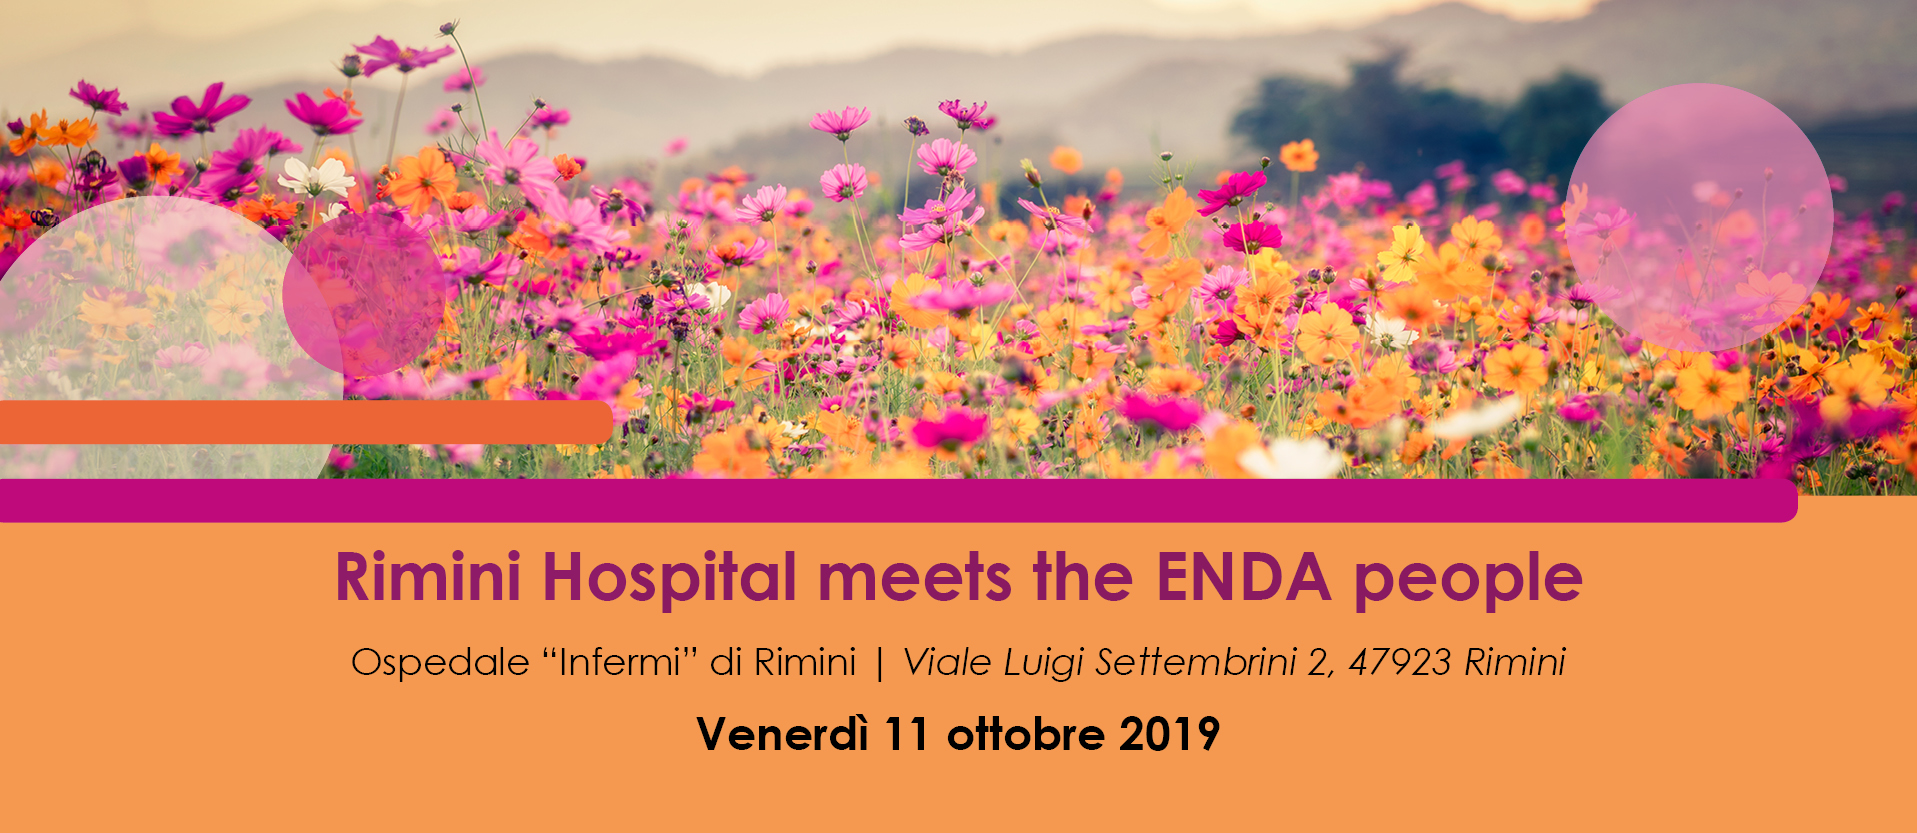 Cover Rimini 11 Ottobre 2019 ENDA